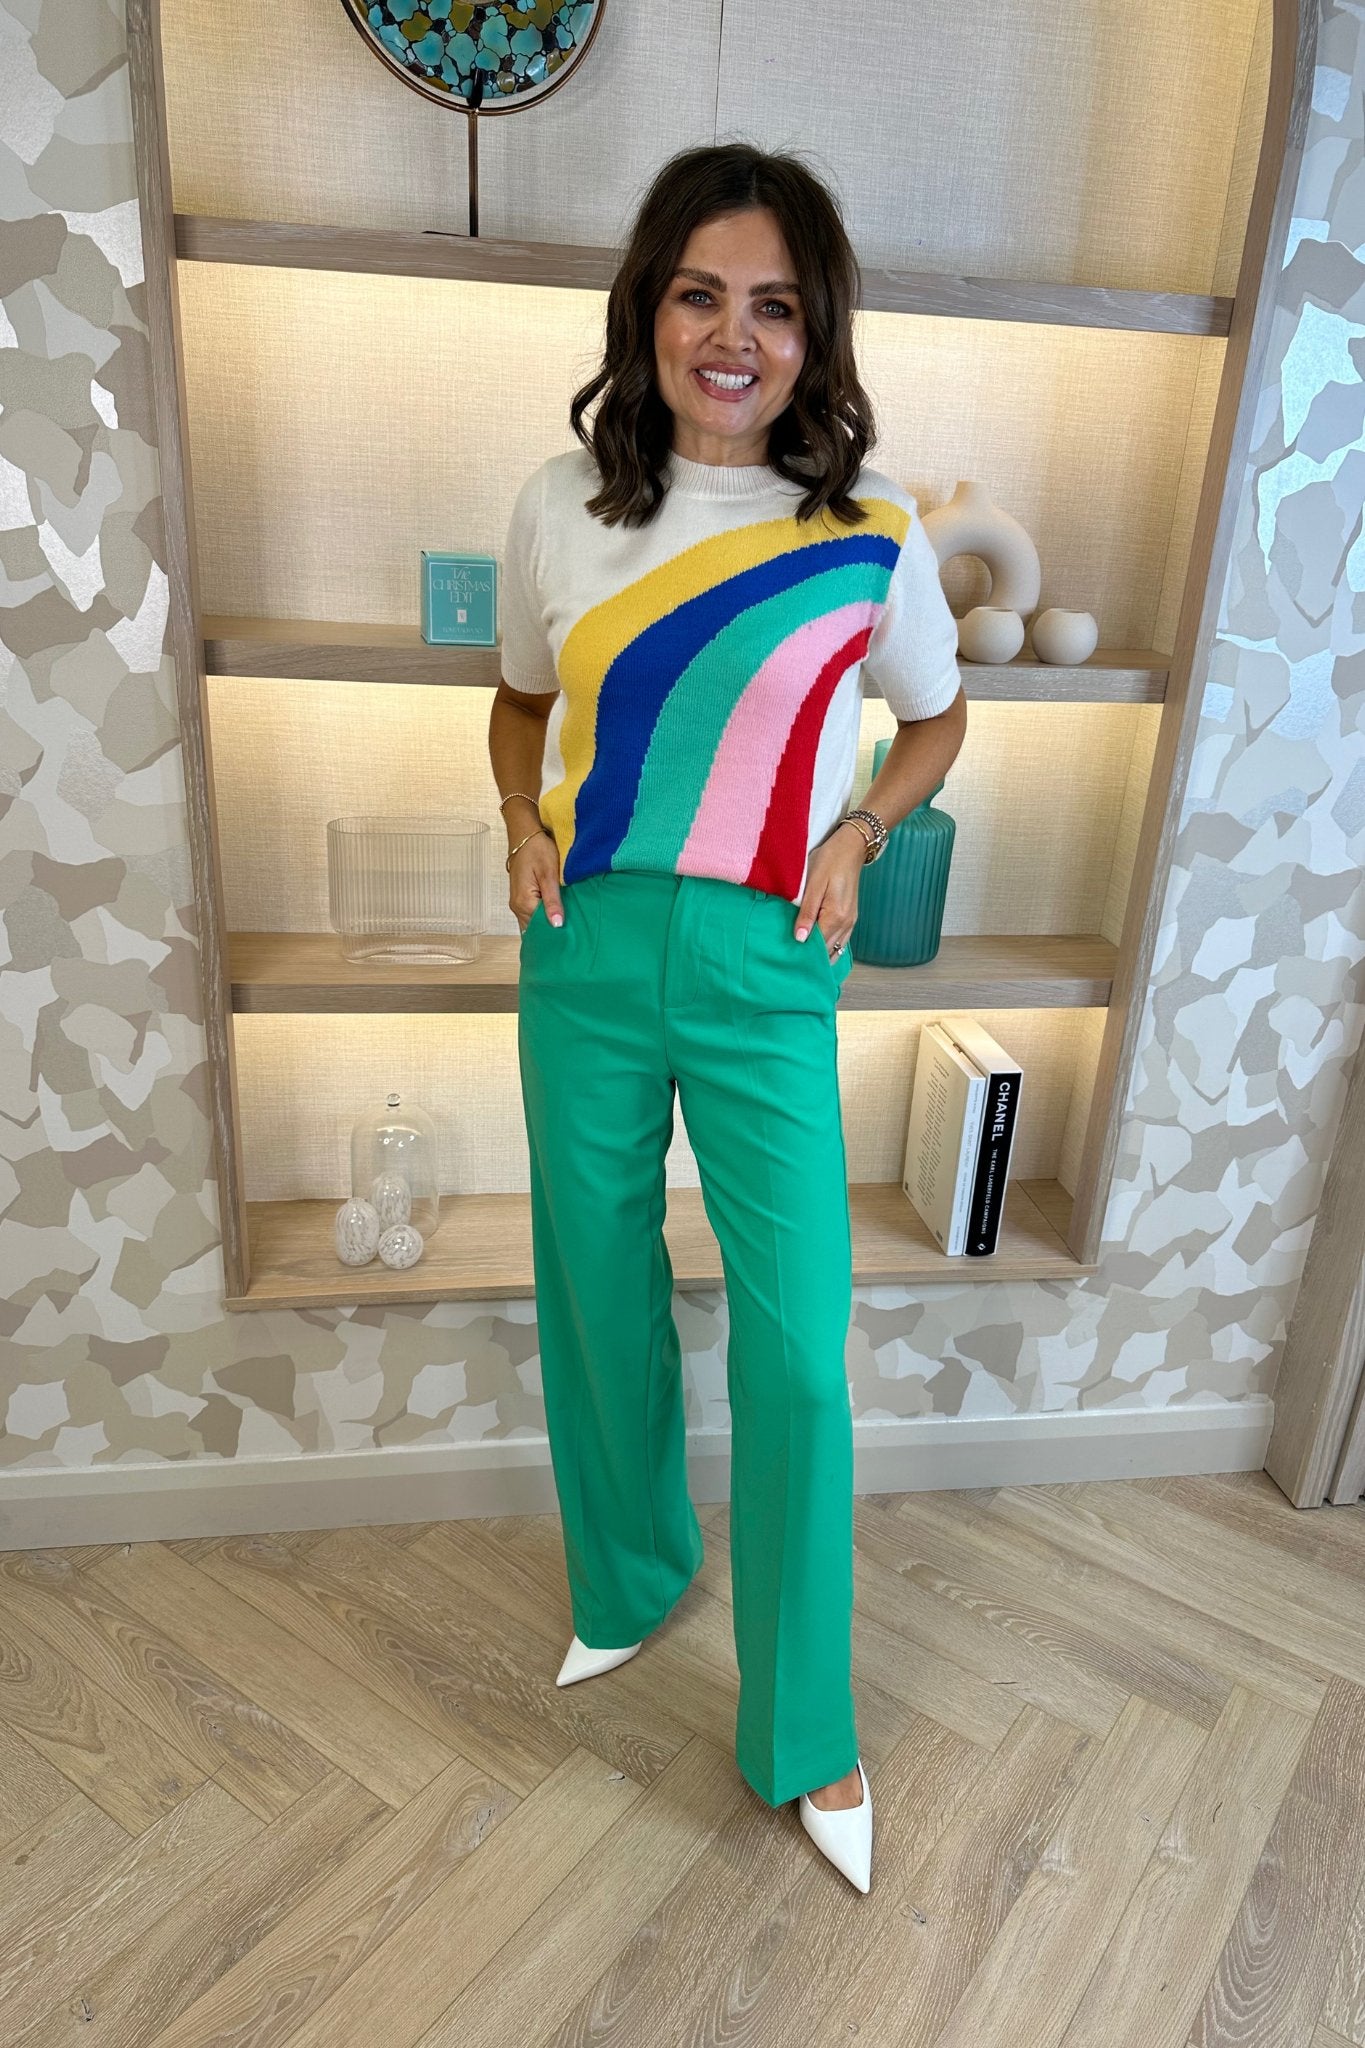 Melanie Rainbow Knit Jumper In Neutral - The Walk in Wardrobe